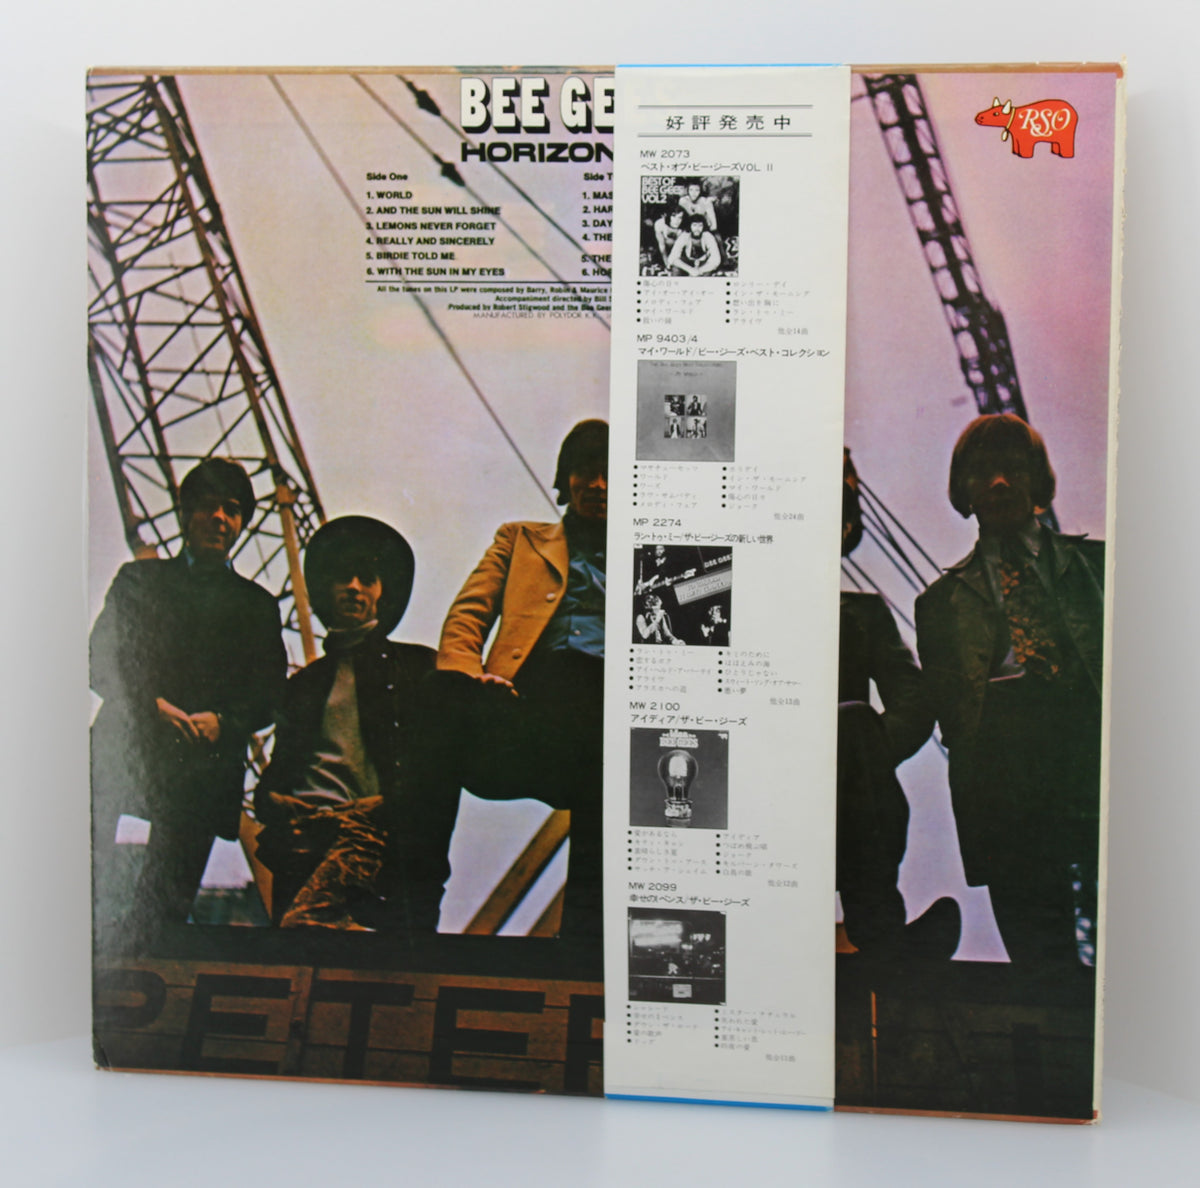 Bee Gees - Horizontal, Vinyl 33Rpm, LP, Album, Reissue, Stereo, Japan 1975